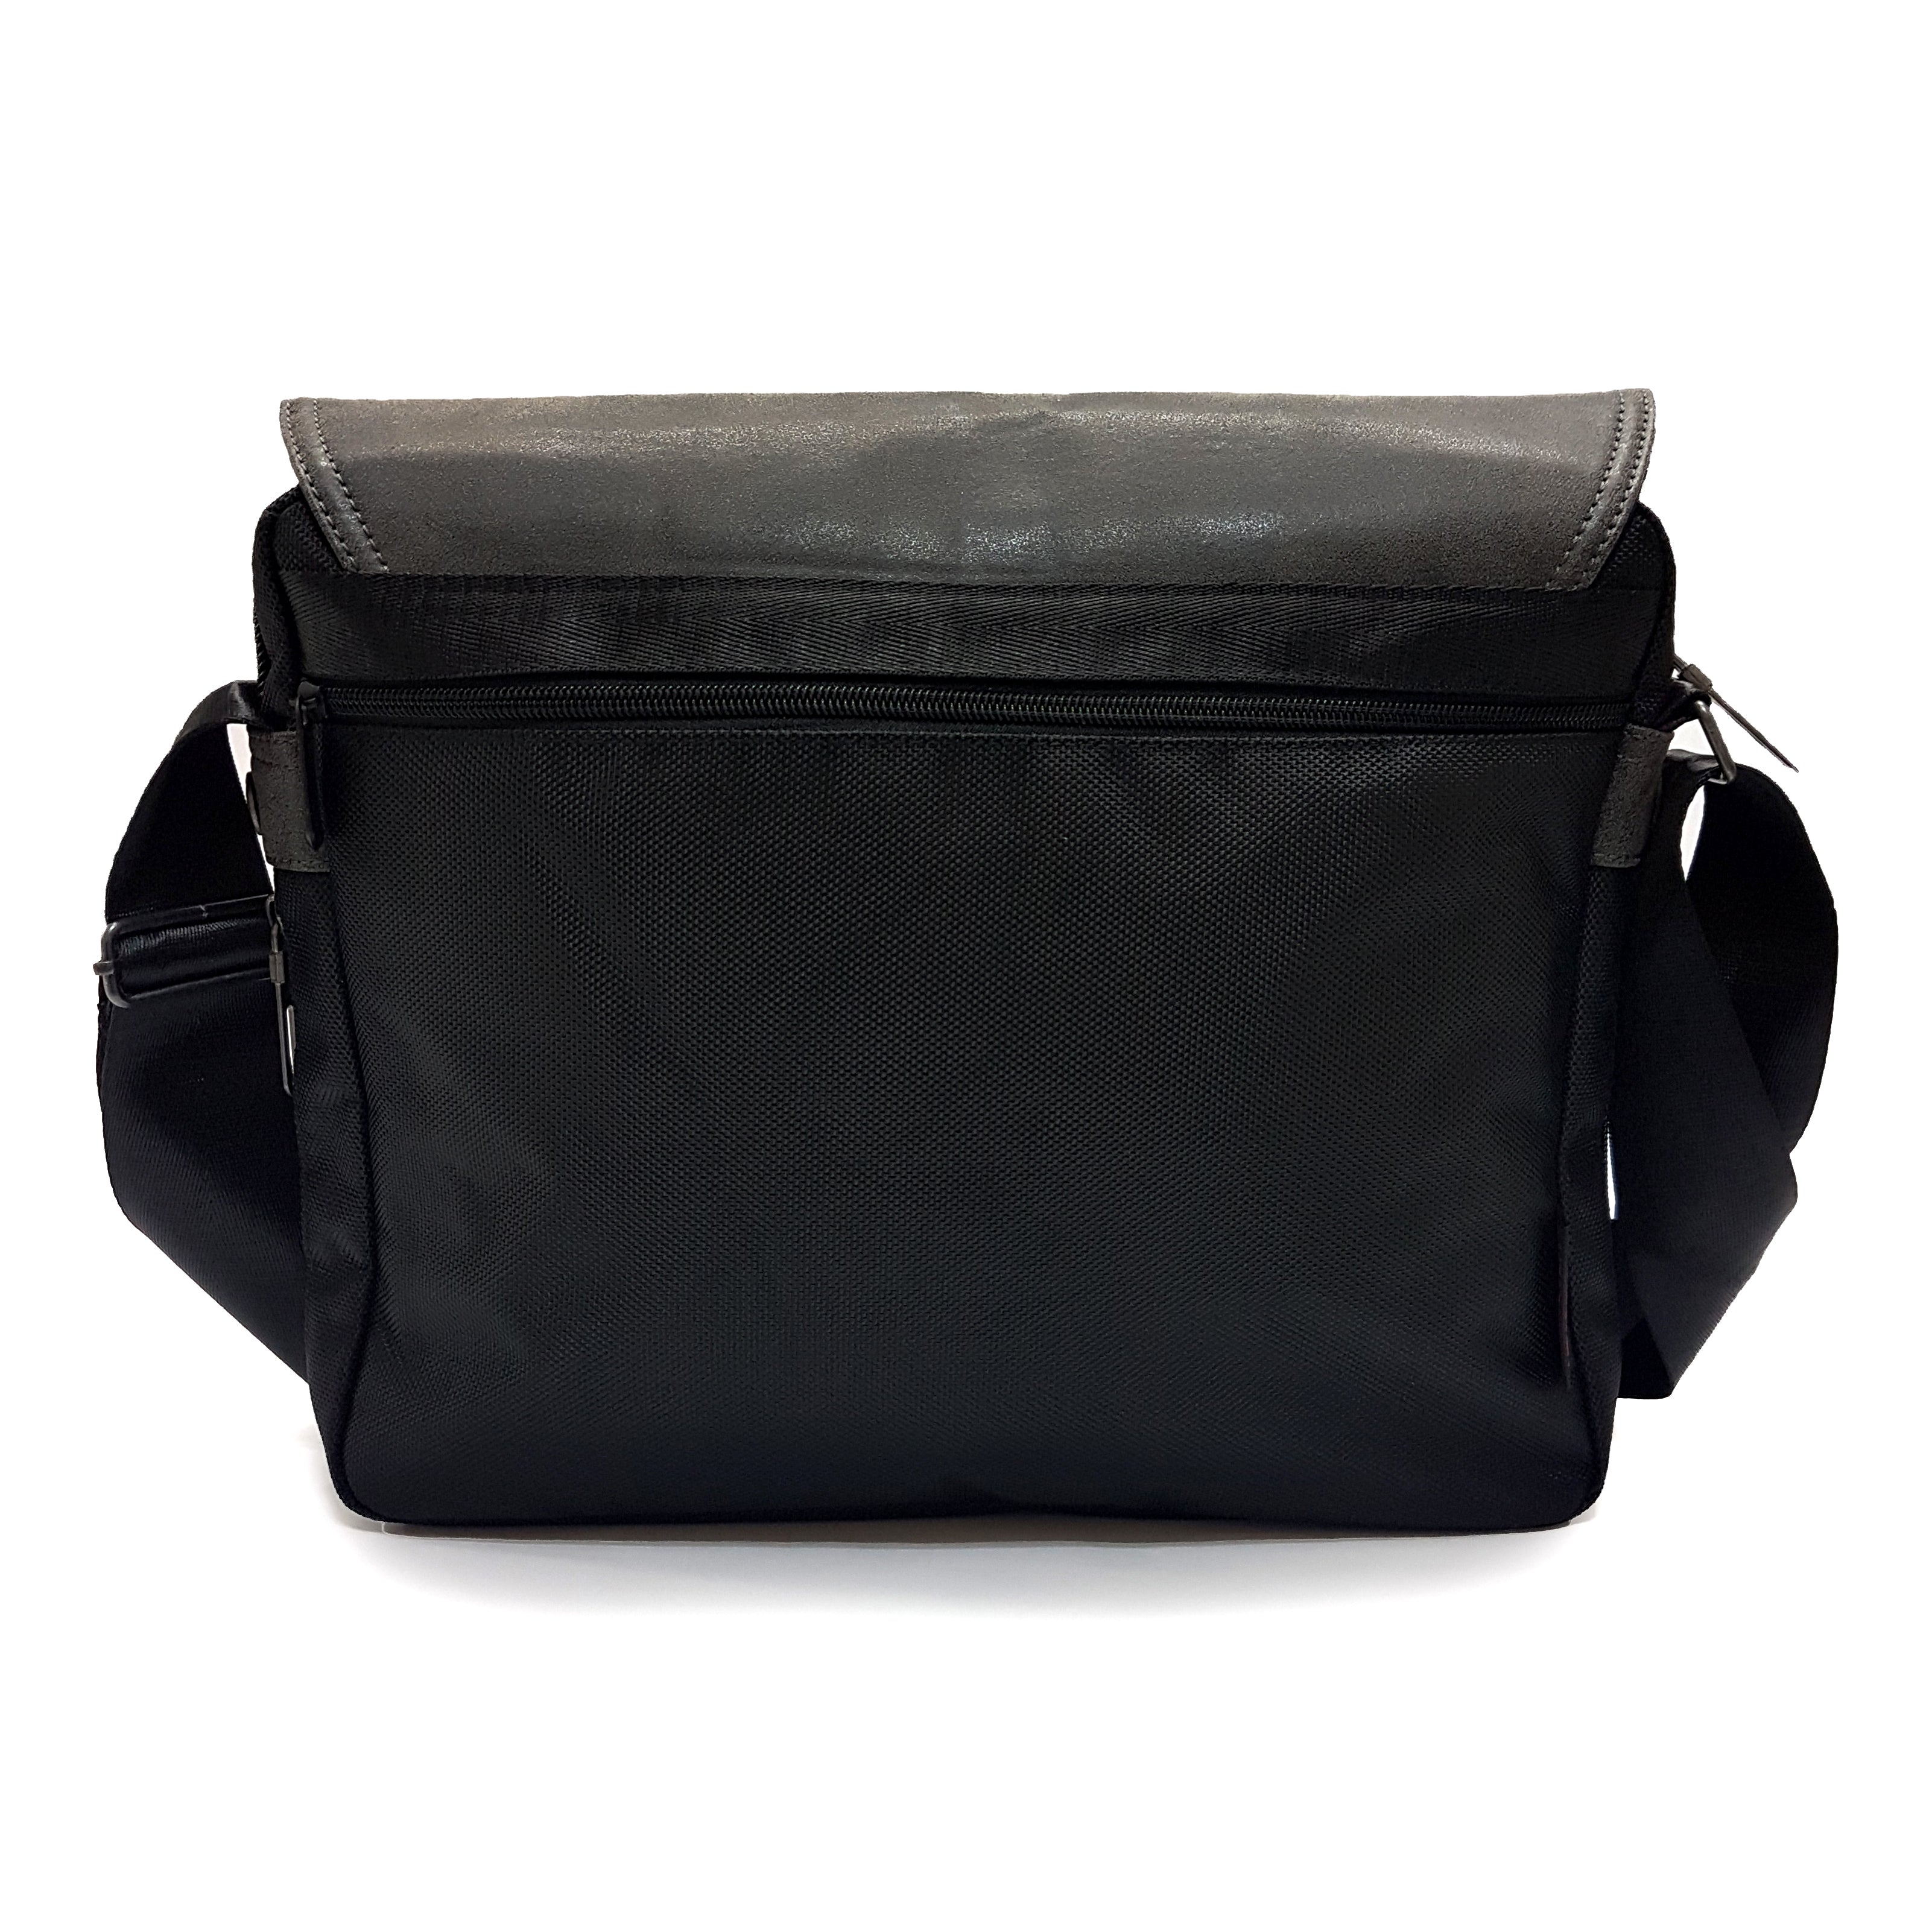 Leather shoulder bag - Fashioraman